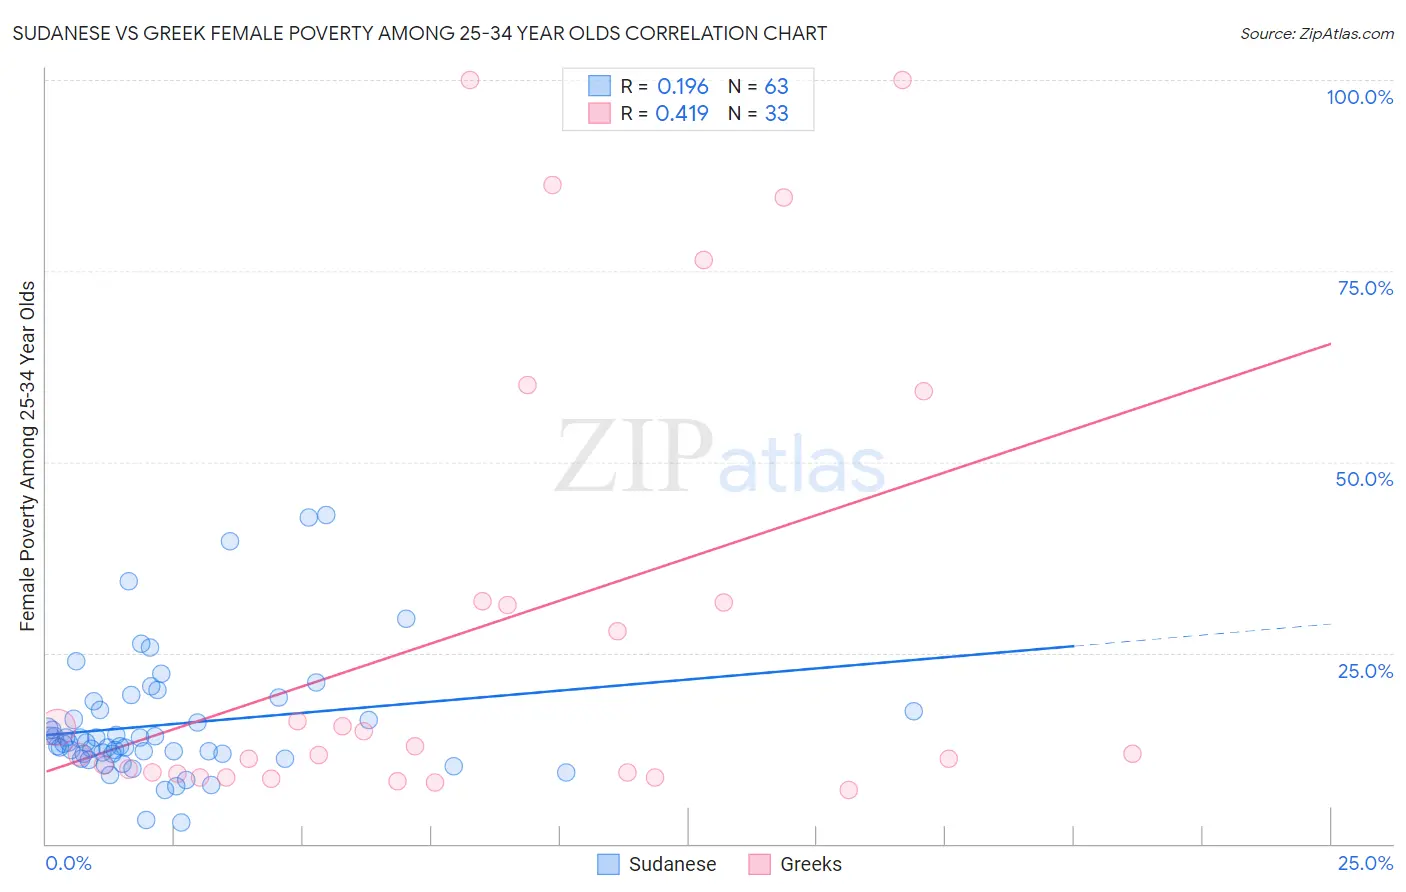 Sudanese vs Greek Female Poverty Among 25-34 Year Olds